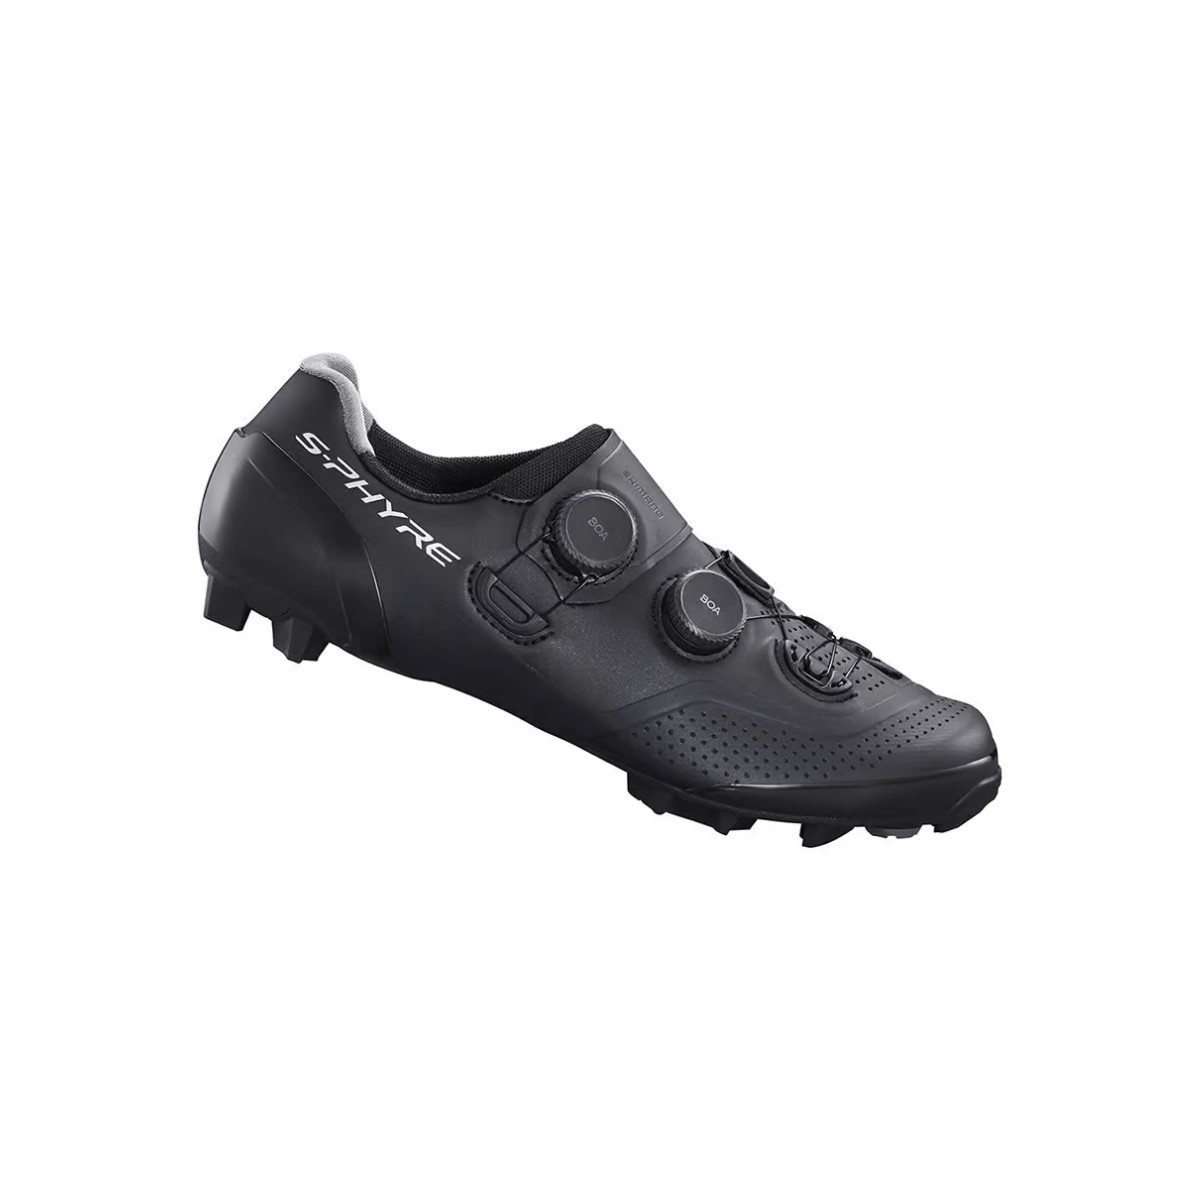 Zapatillas Shimano XC902 MTB Negro, Talla 42,5 - EUR